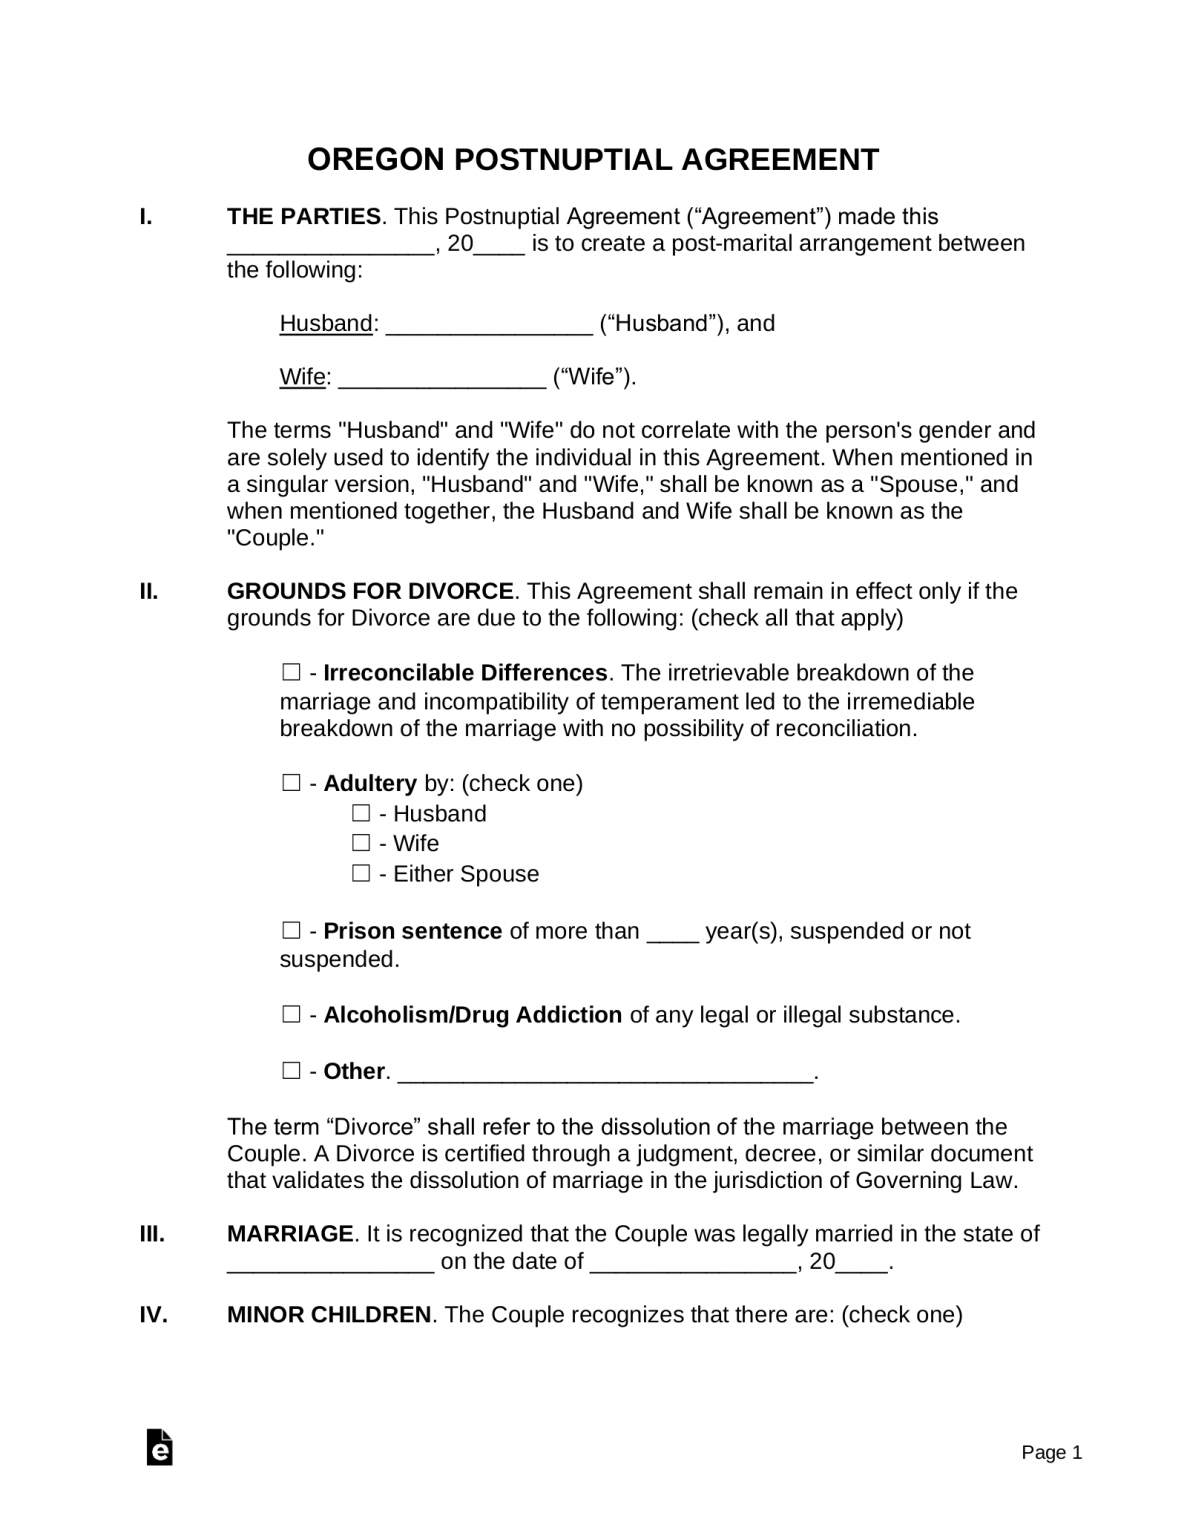 free-oregon-postnuptial-agreement-template-pdf-word-eforms